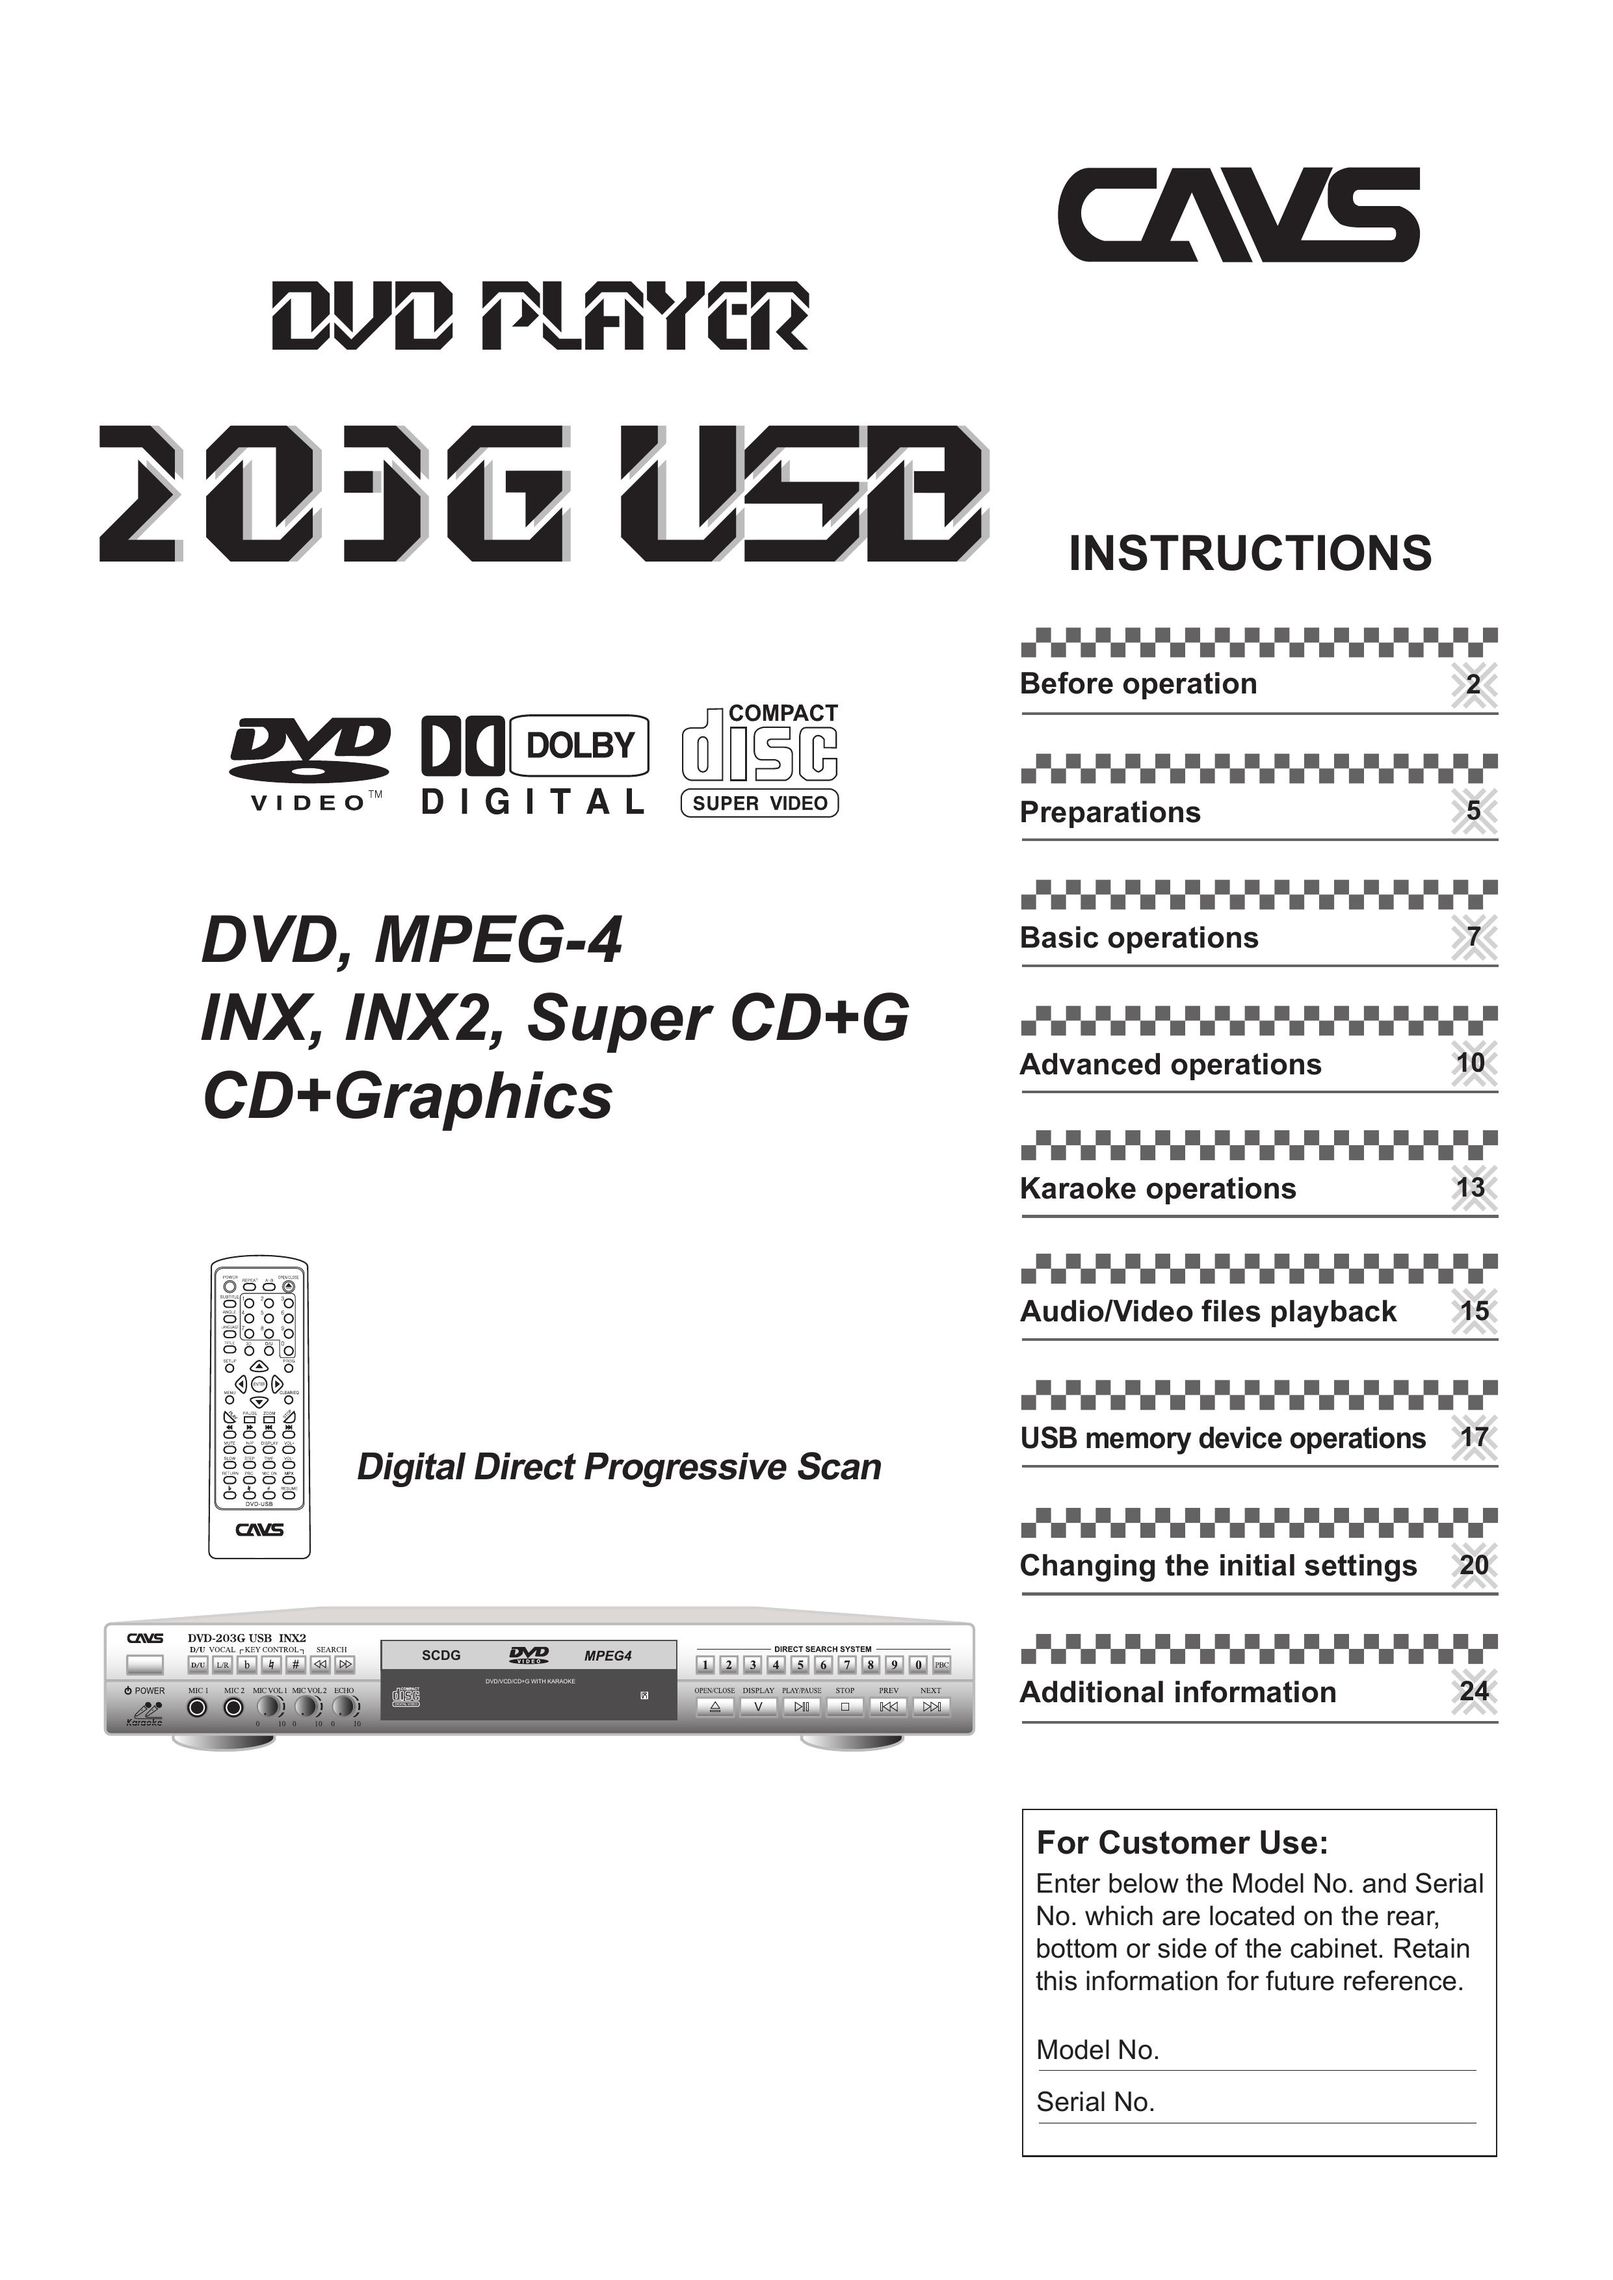 CAVS 203G USB Portable DVD Player User Manual